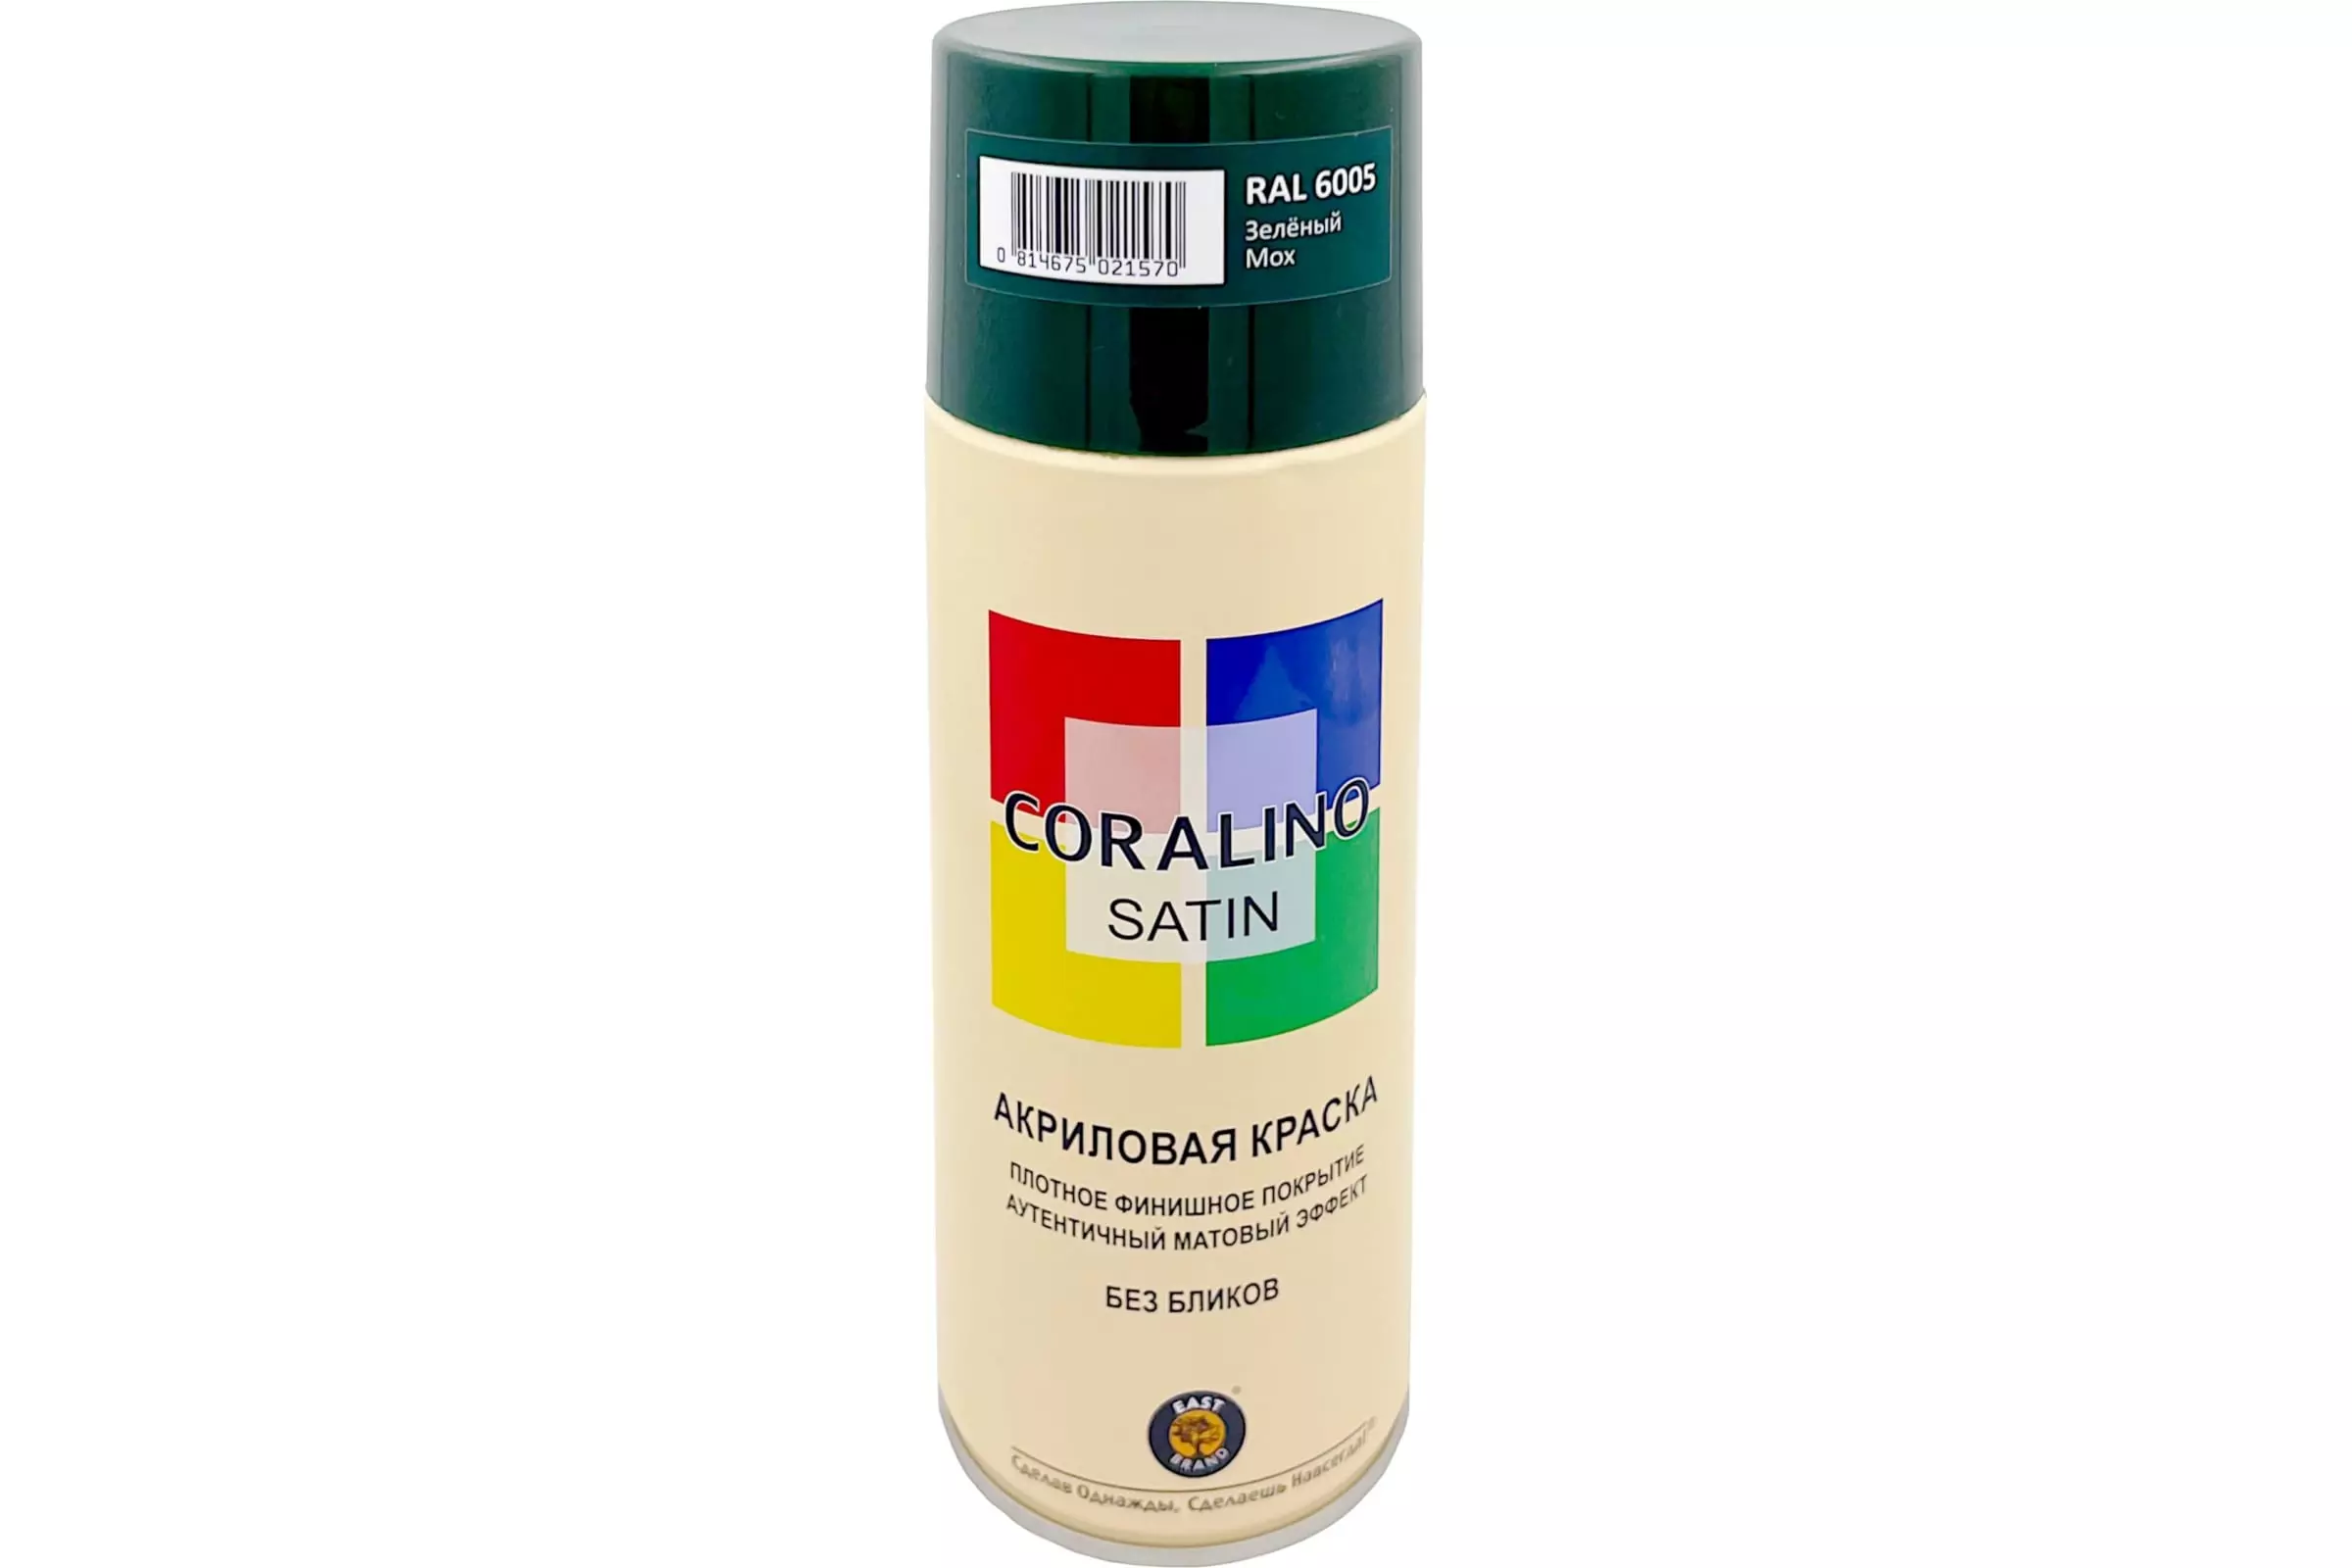 Аэрозольная краска RAL 6005 Coralino SATIN 520 мл/200 г зеленый мох полуматовый CS6005